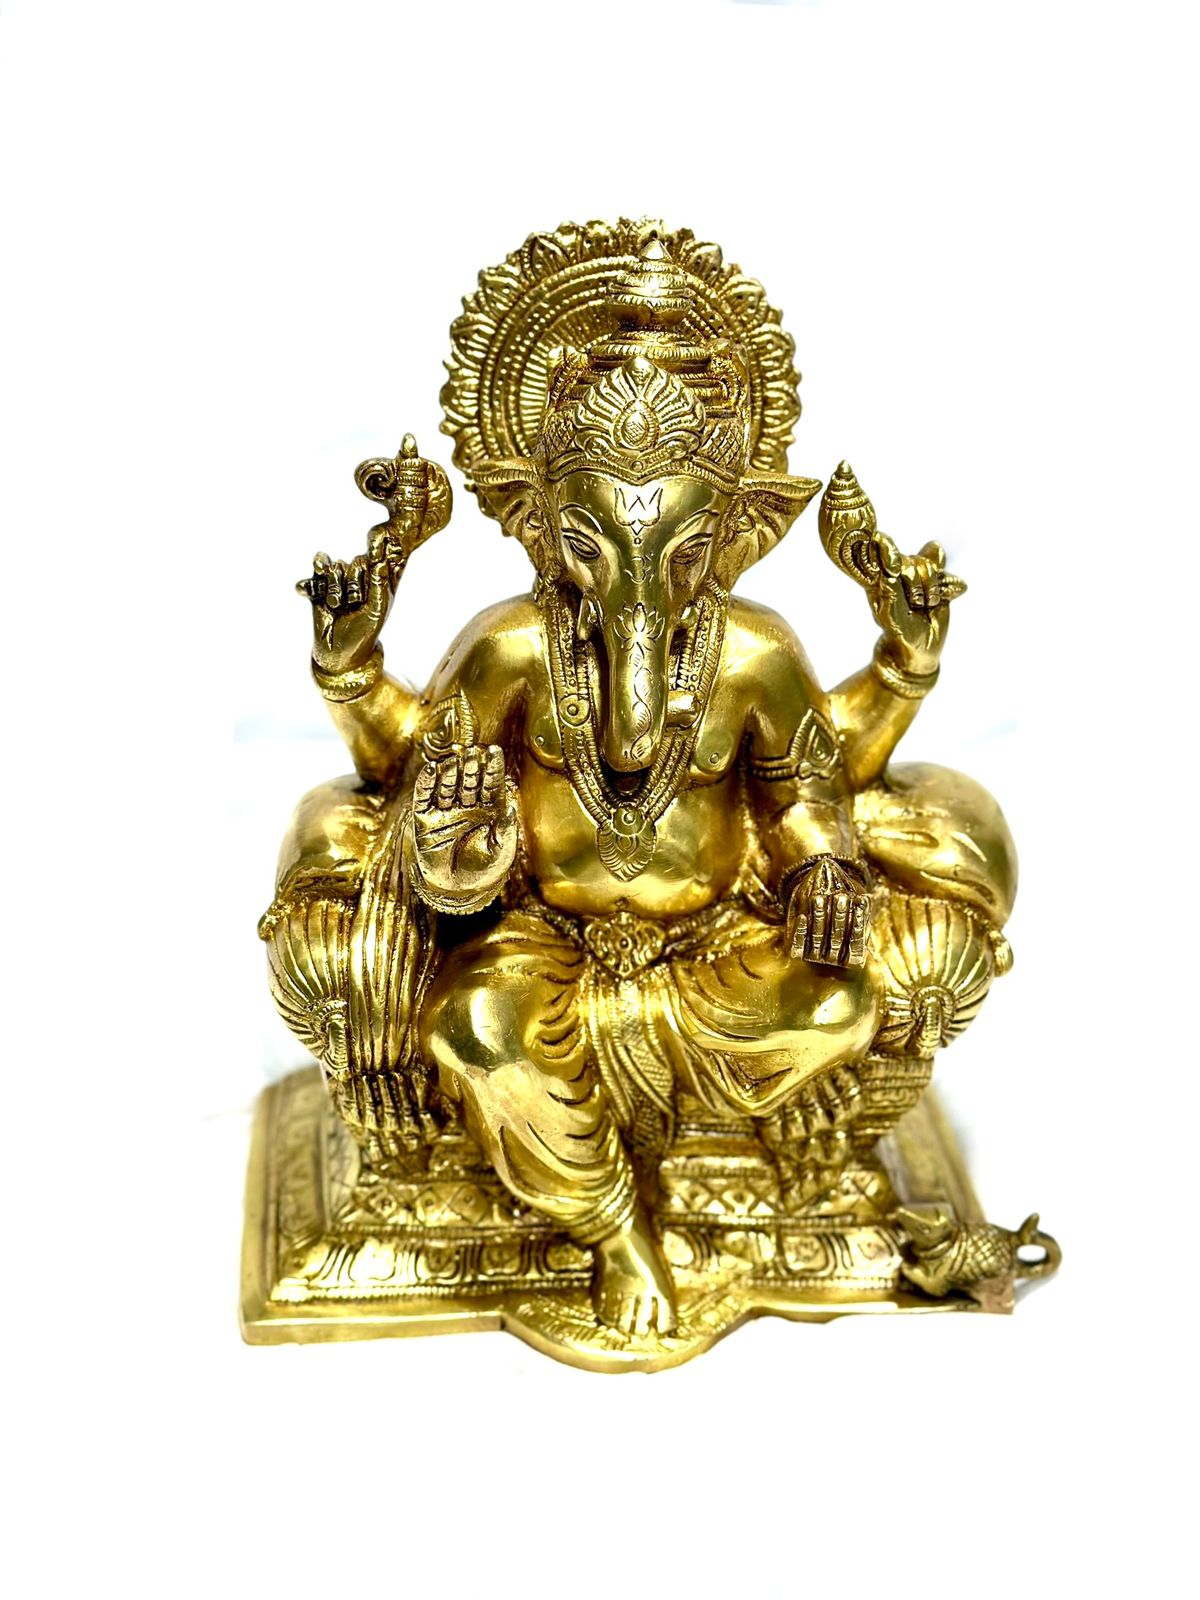 Magnificent Brass Ganesha Idol Indian Craftsmanship Décor By Tamrapatra